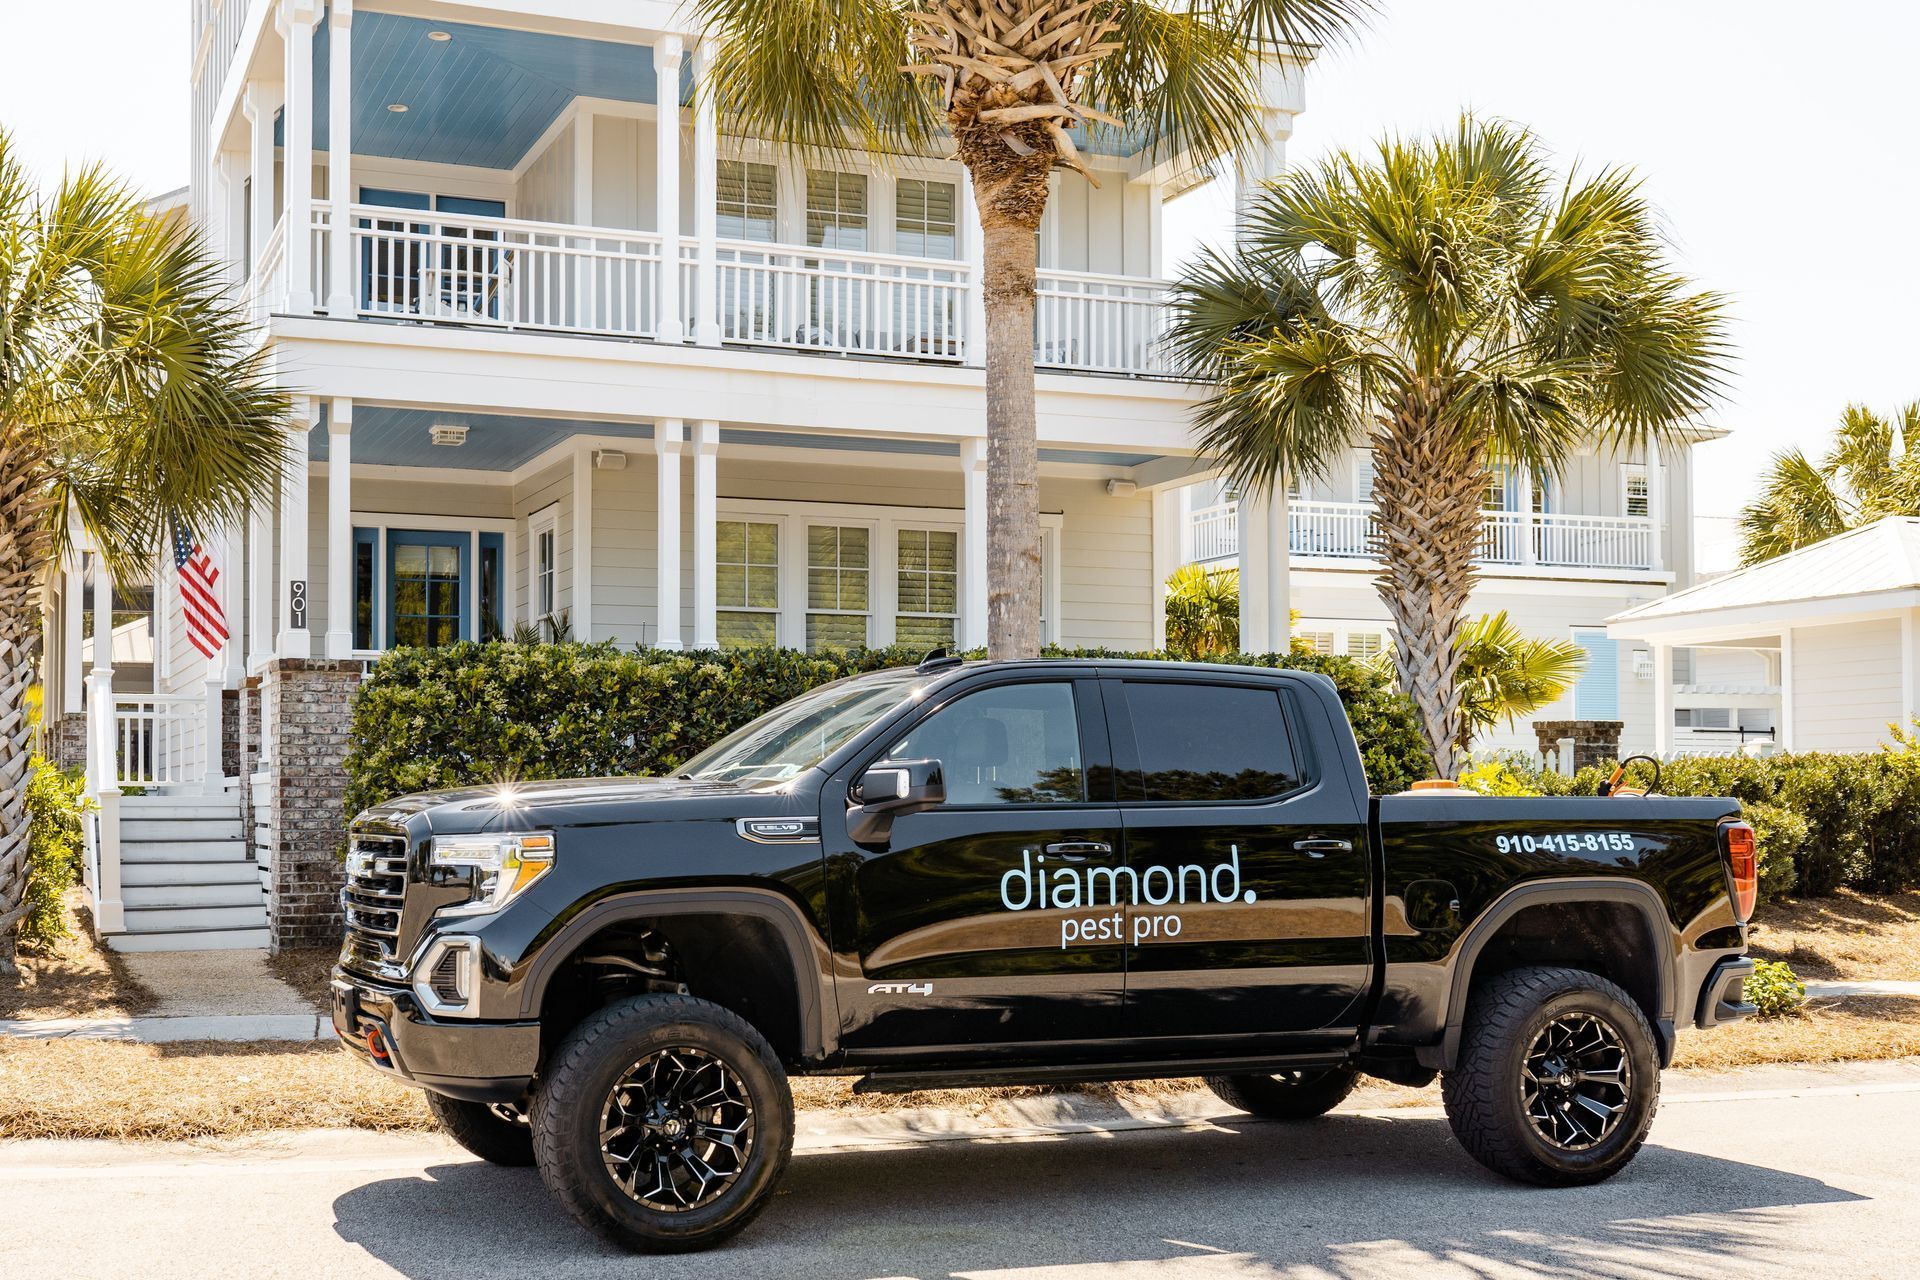 diamond pest pro company truck